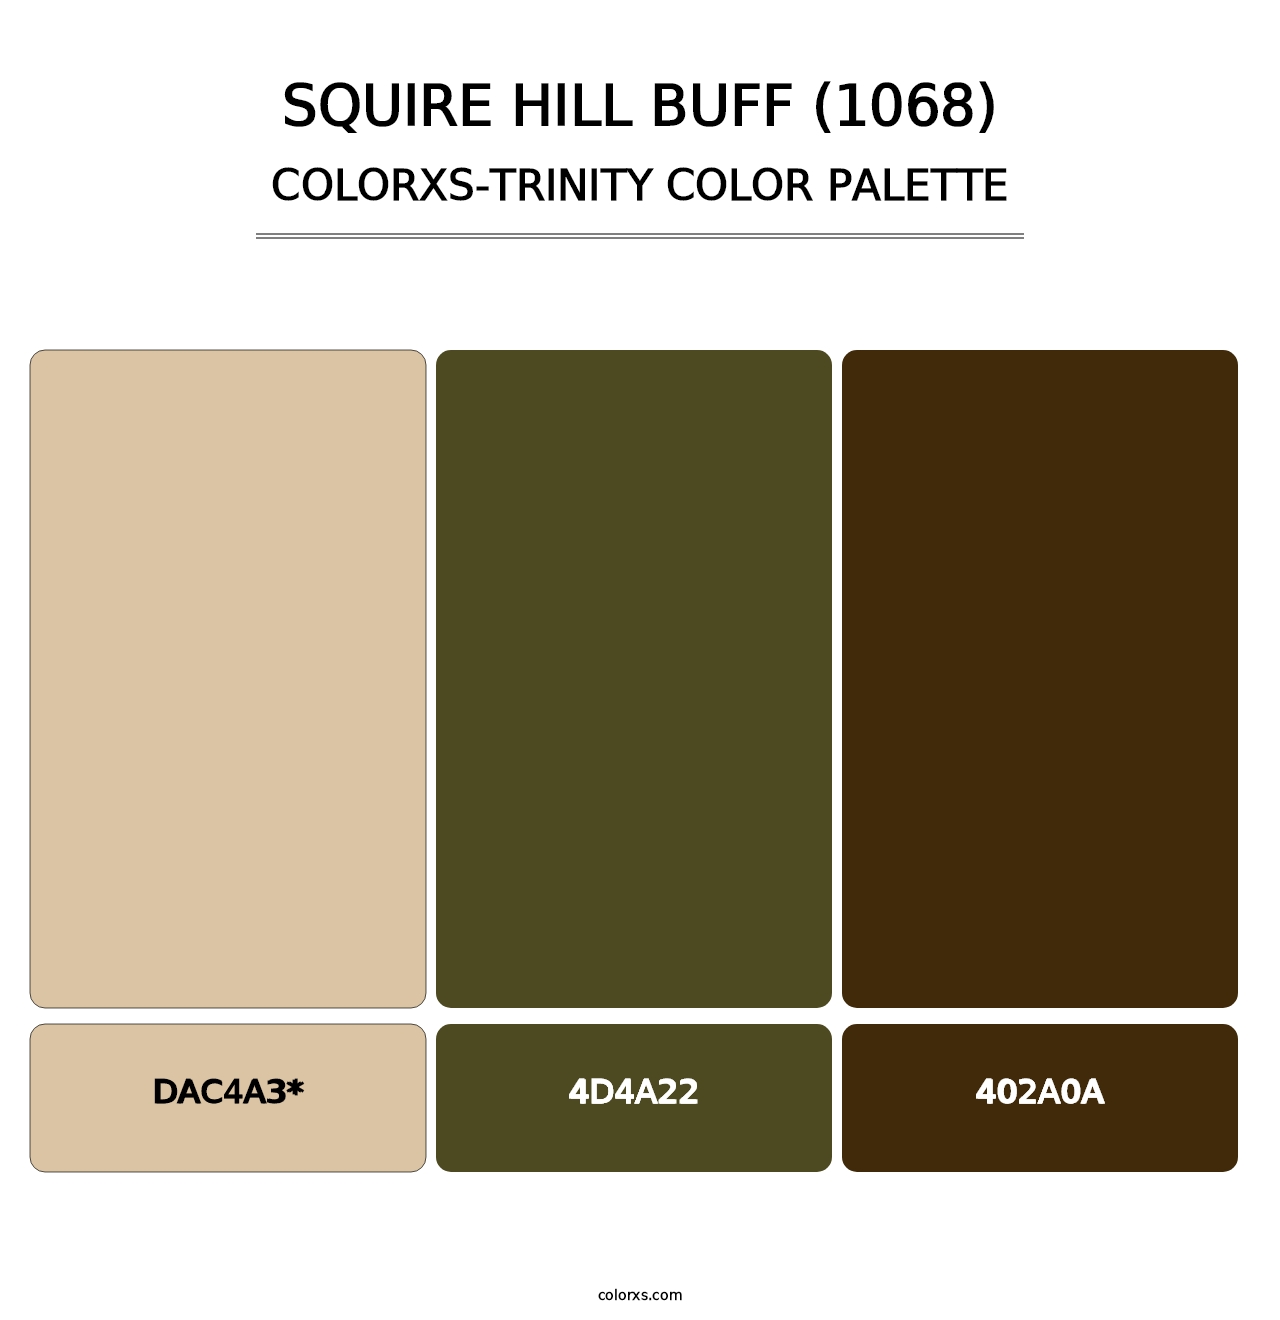 Squire Hill Buff (1068) - Colorxs Trinity Palette